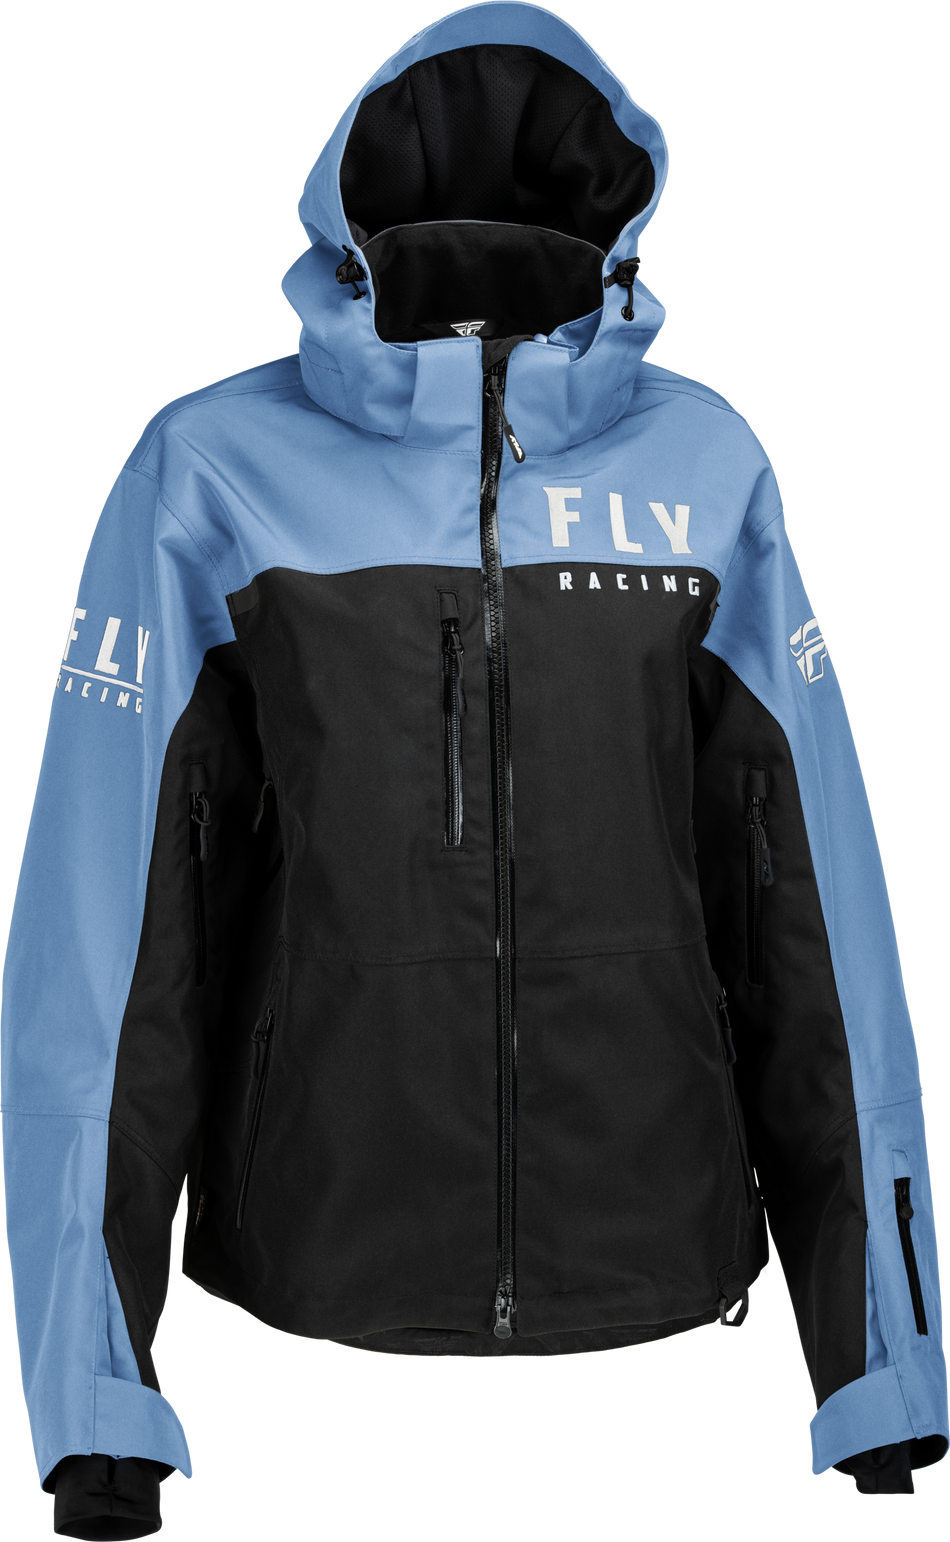 FLY RACING Women's Carbon Jacket Black/Blue Xl 470-4501X